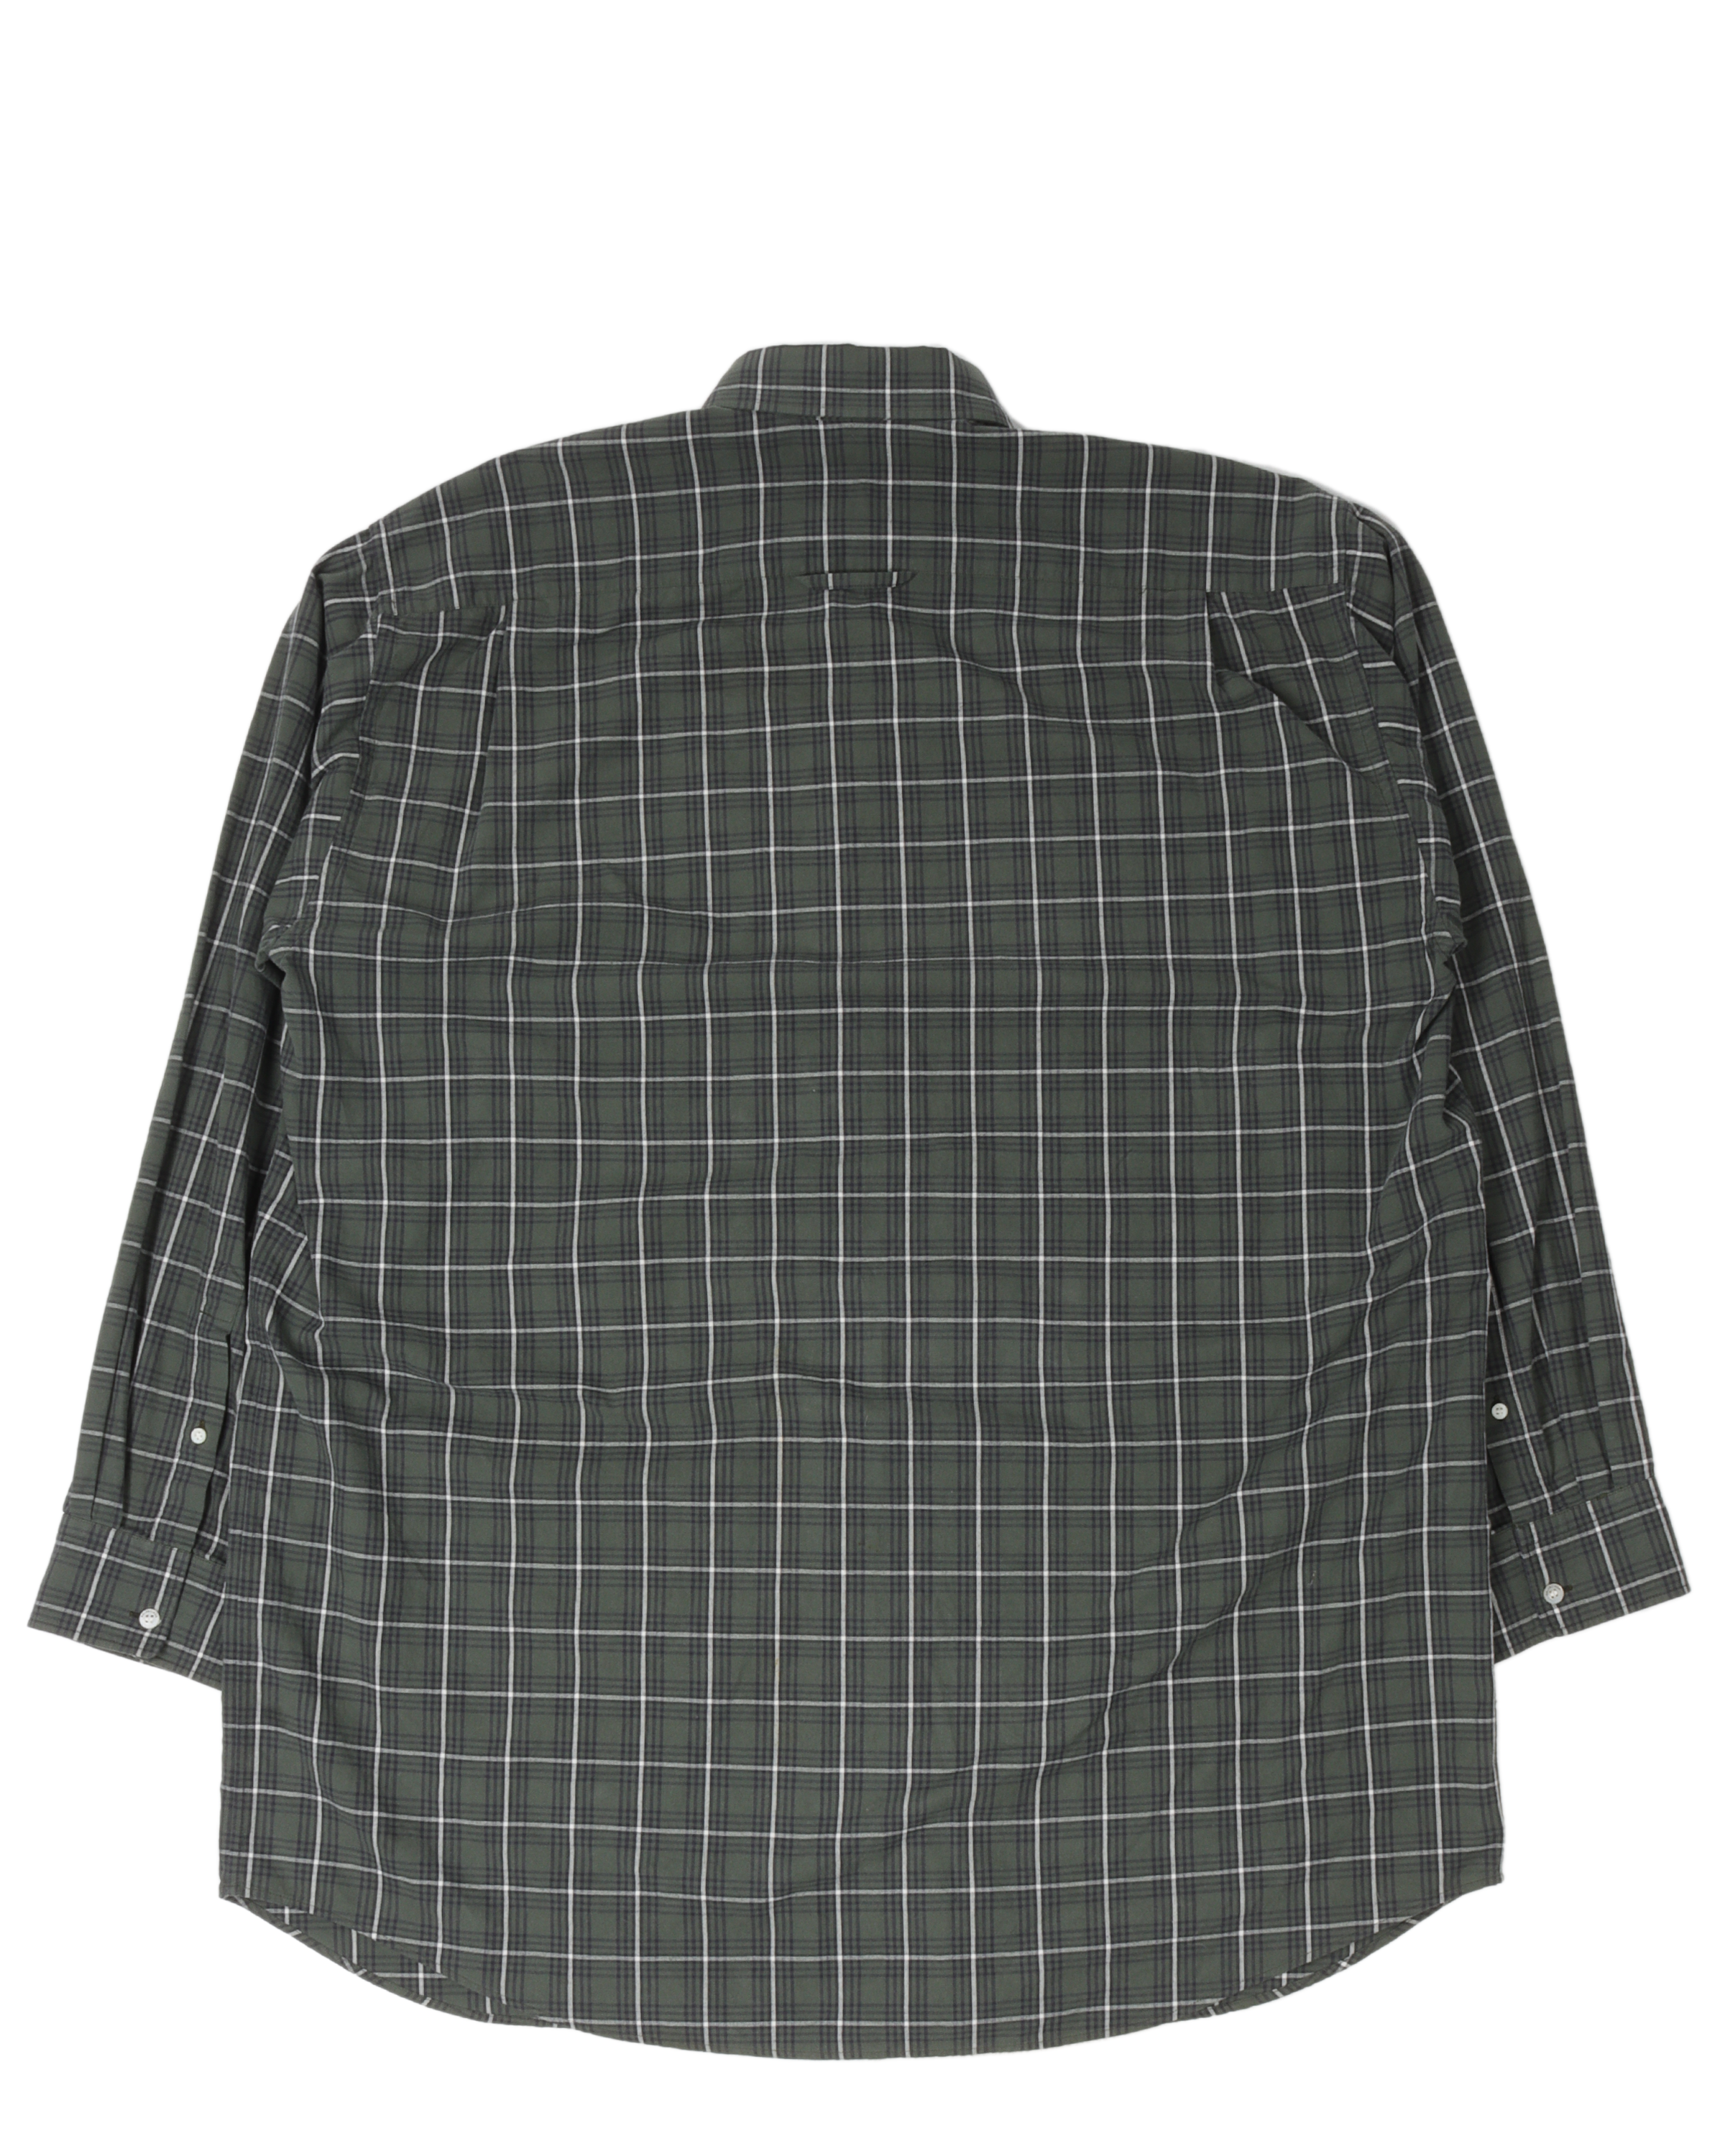 OSFA Checkered Shirt